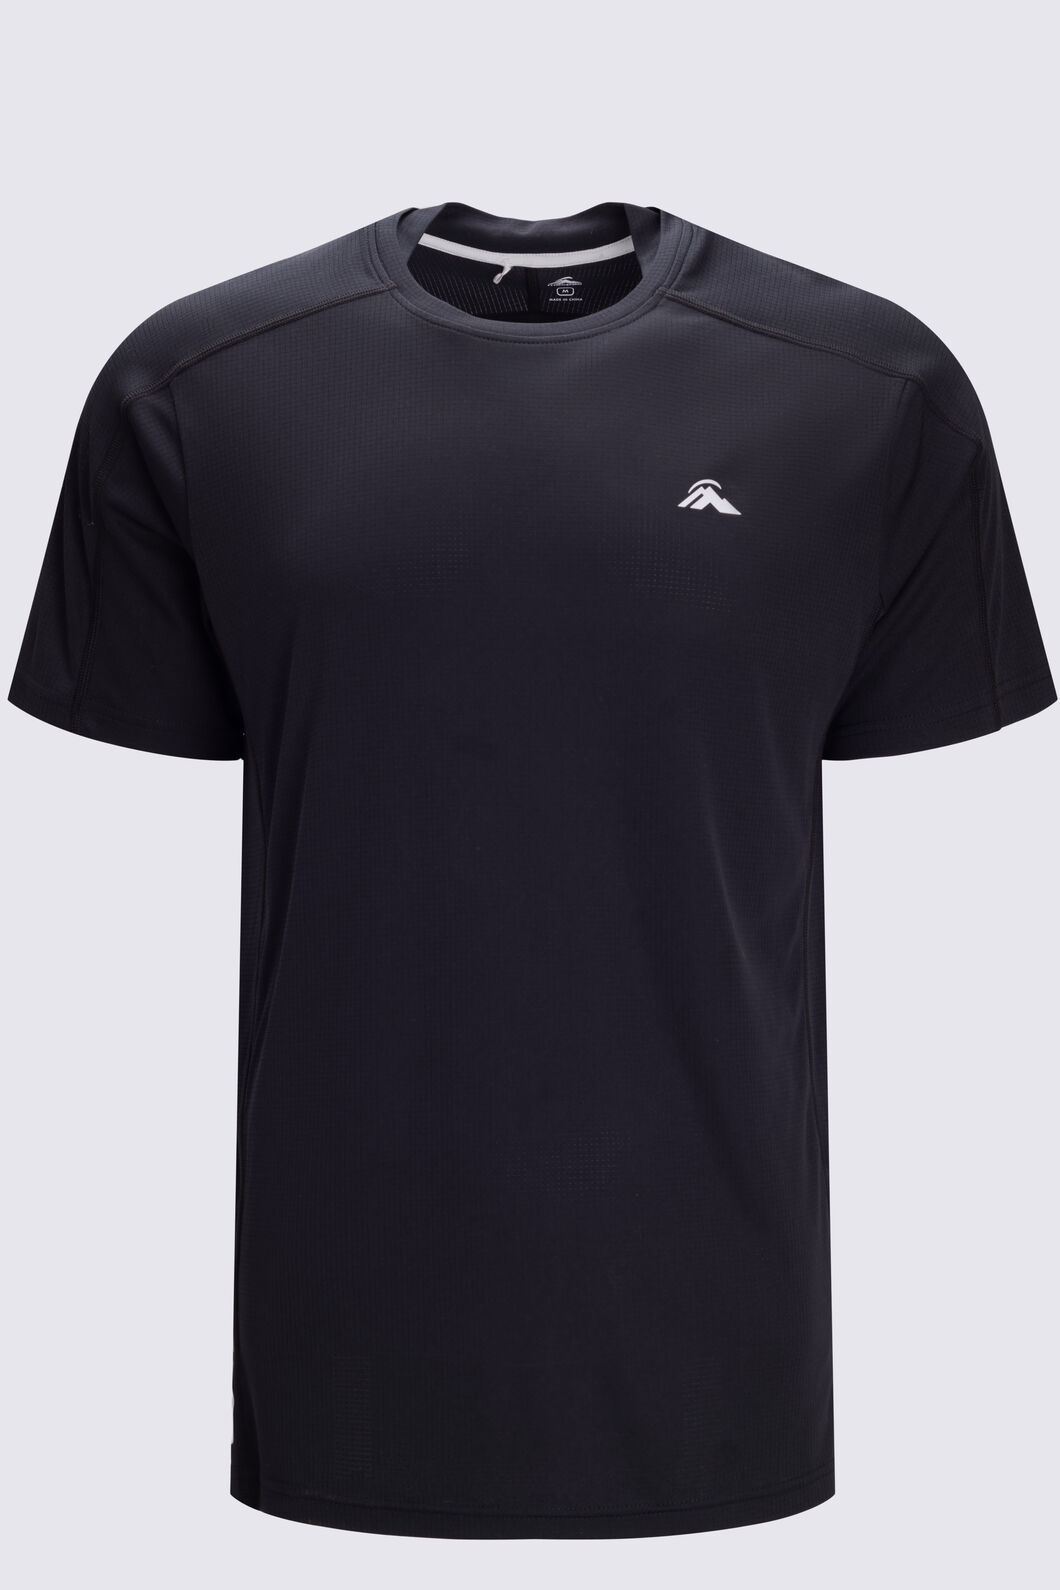 Macpac Men's Trail T-Shirt, Black, hi-res